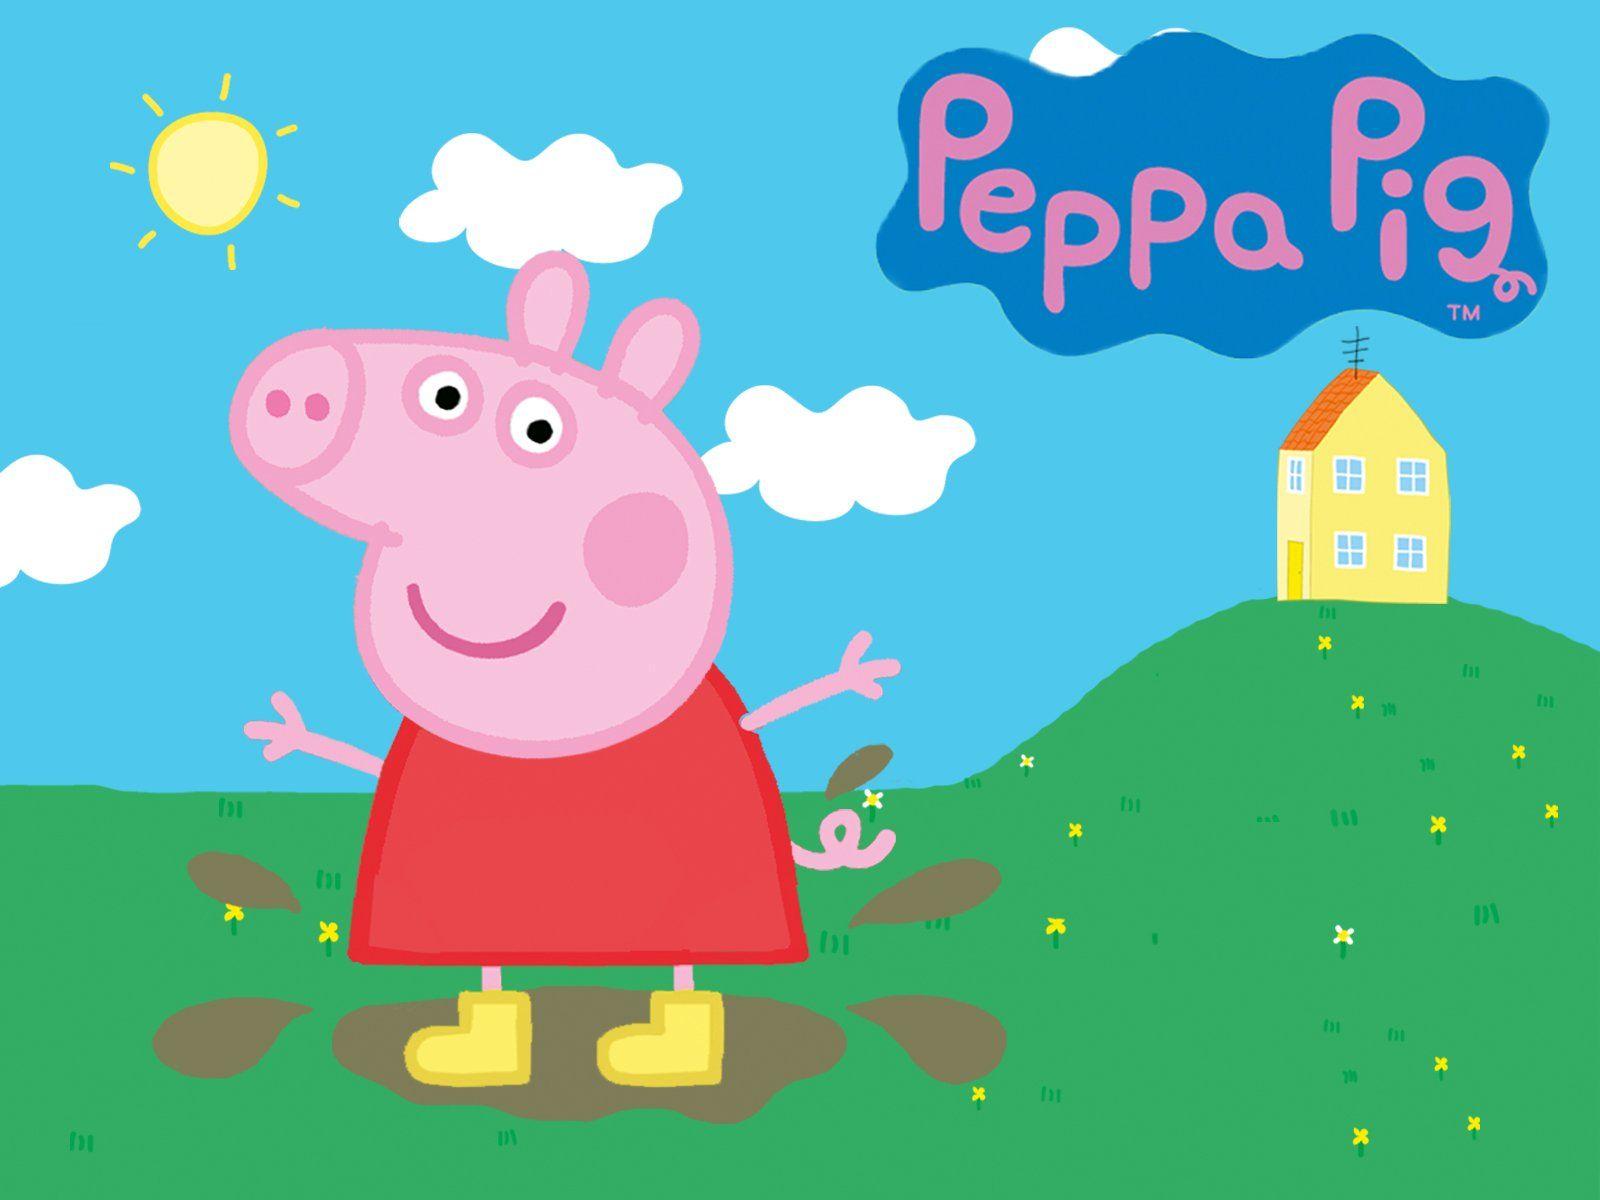 Peppa Pig House Wallpapers - Top Free Peppa Pig House ...